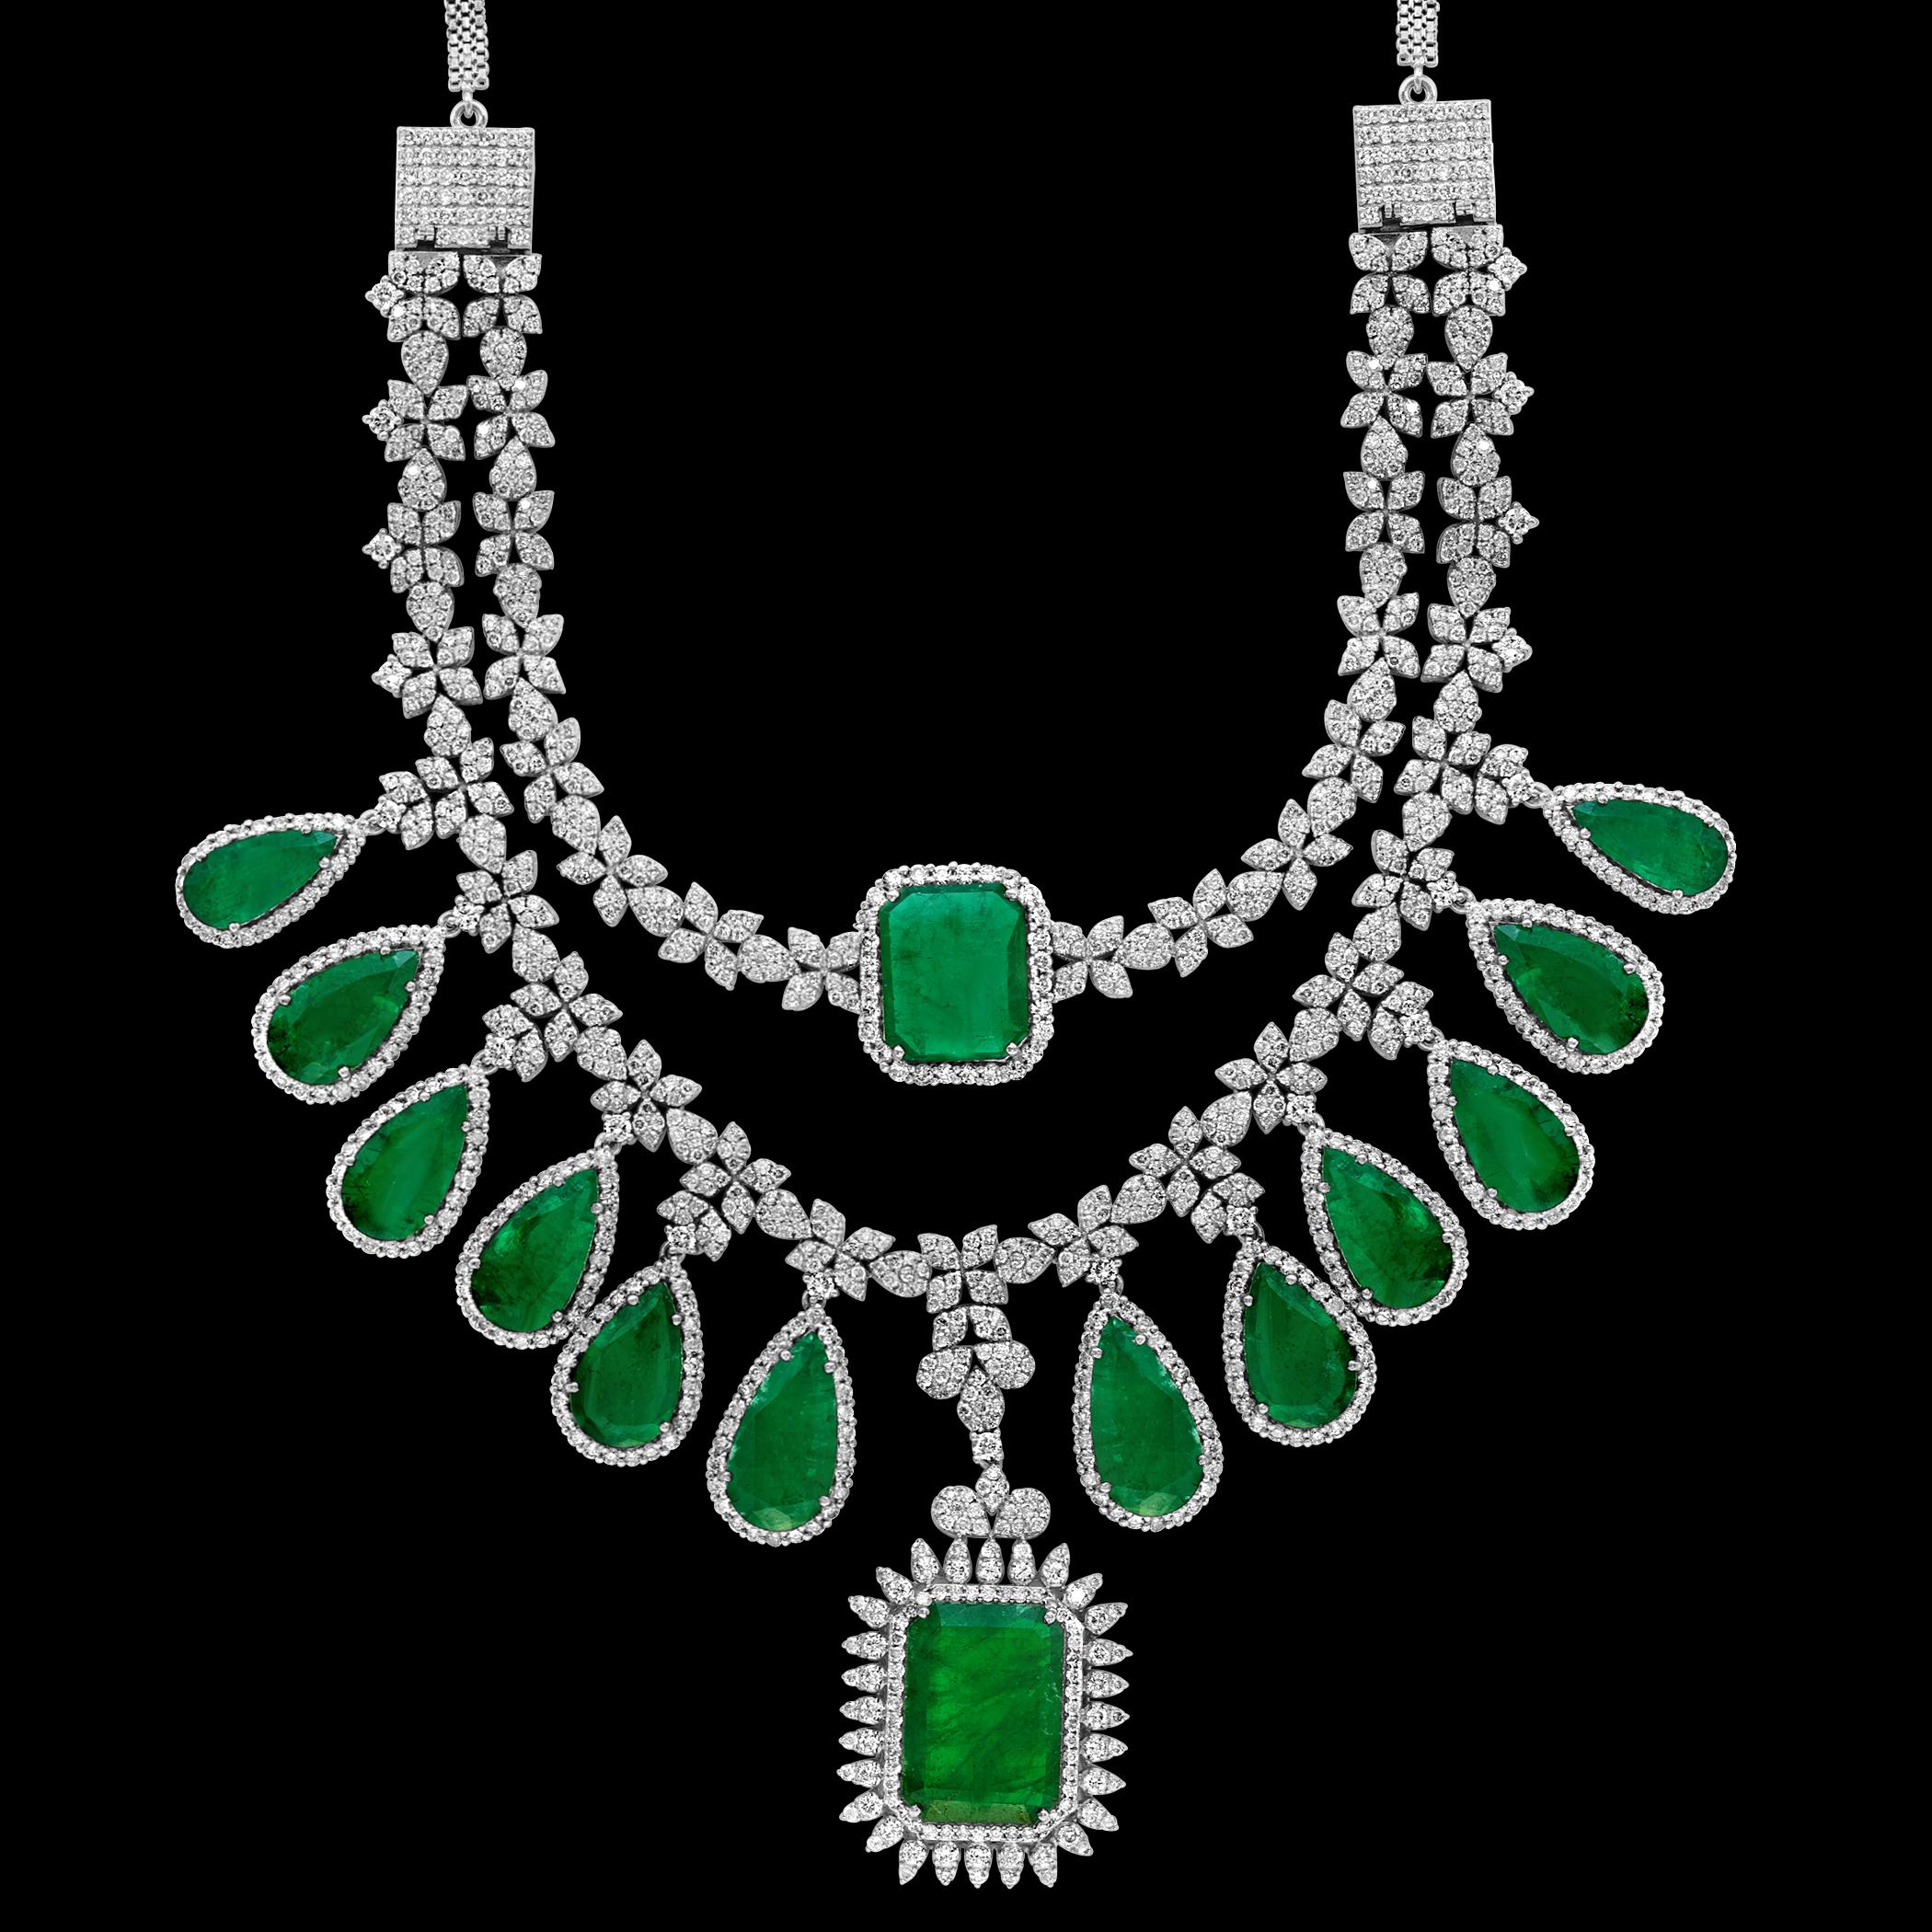 80 Ct solitaire Zambian Emerald & 25Ct Diamond Fringe Necklace detachable layers 7